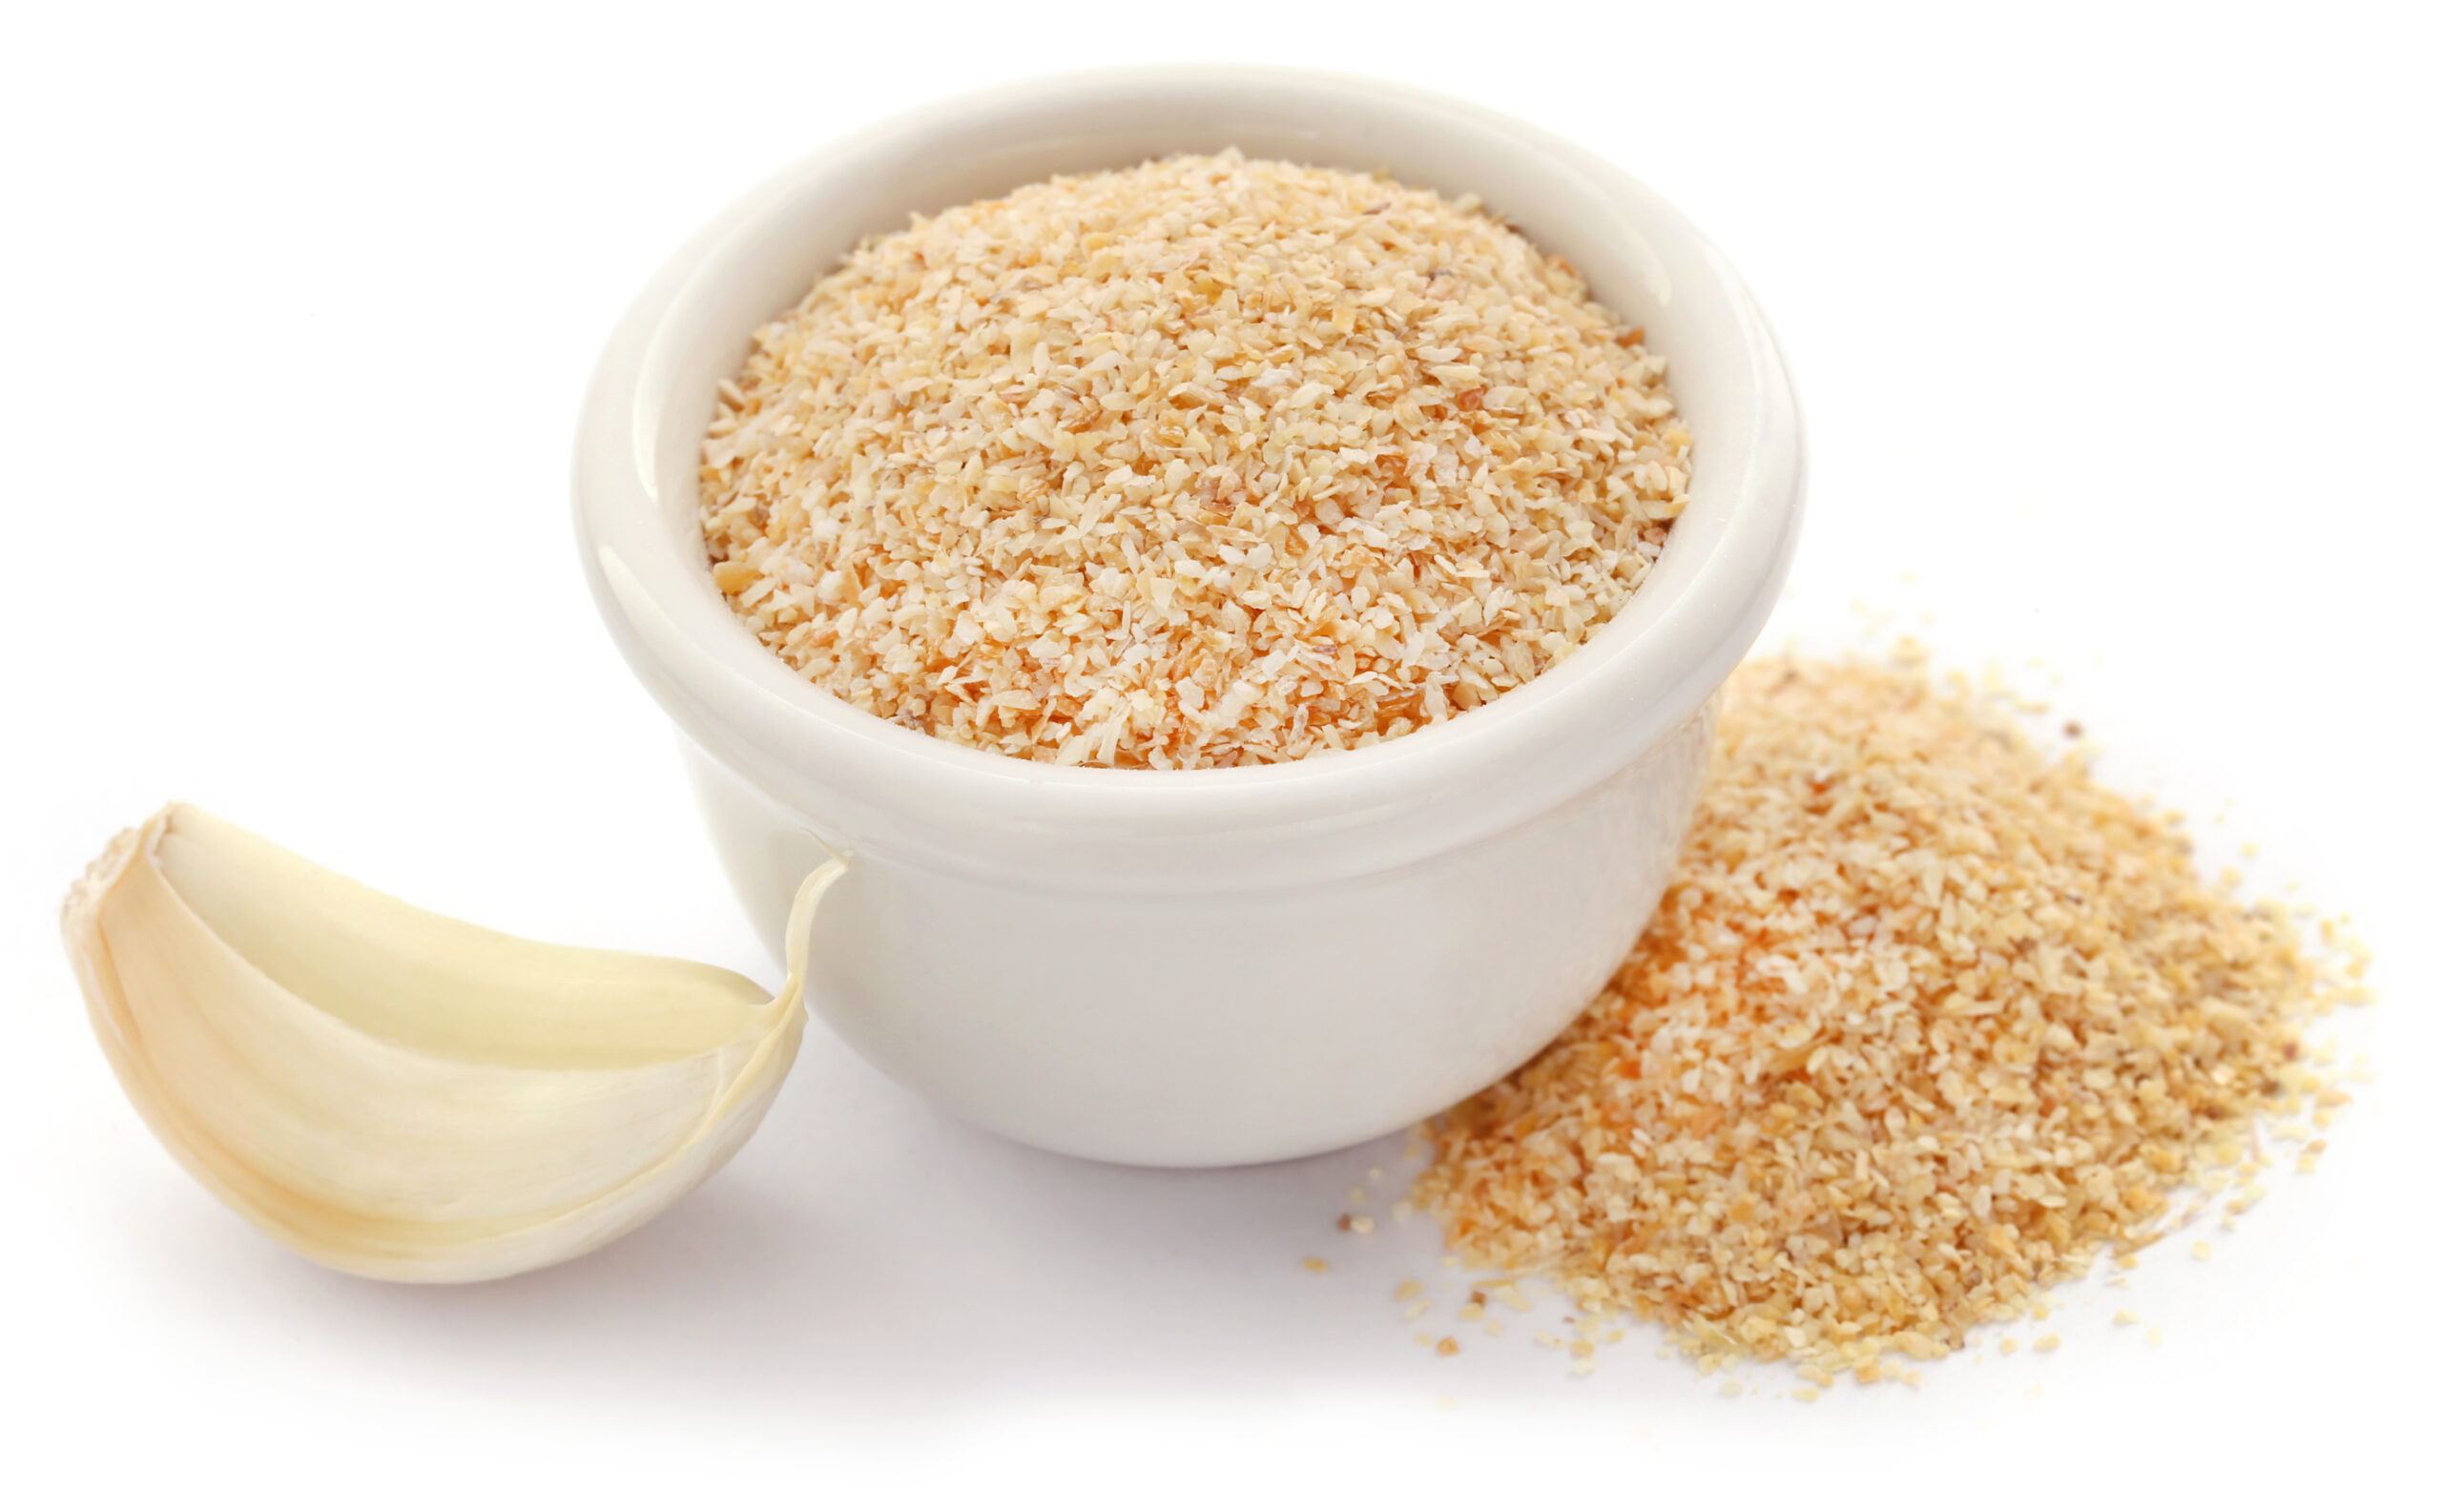 Substitute Garlic Powder for Garlic Salt